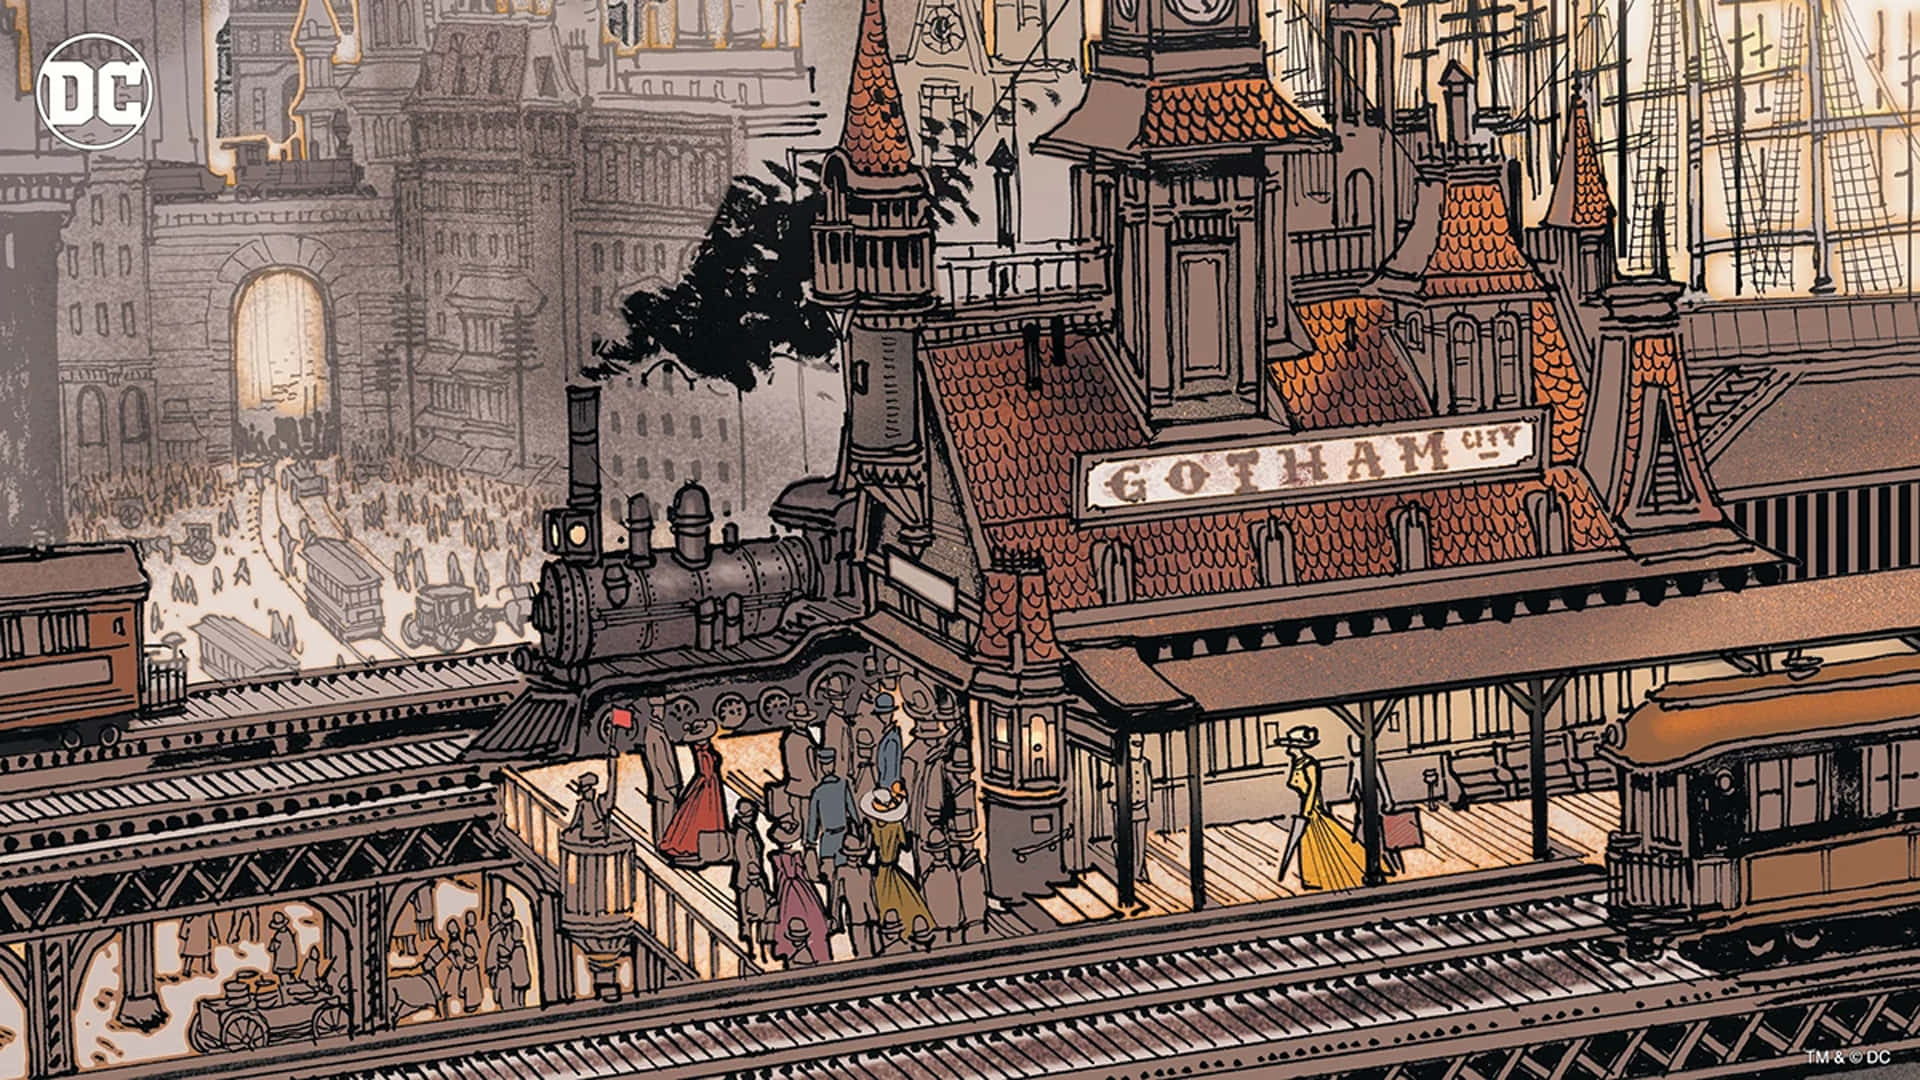 Adventure Awaits in Gotham City Wallpaper